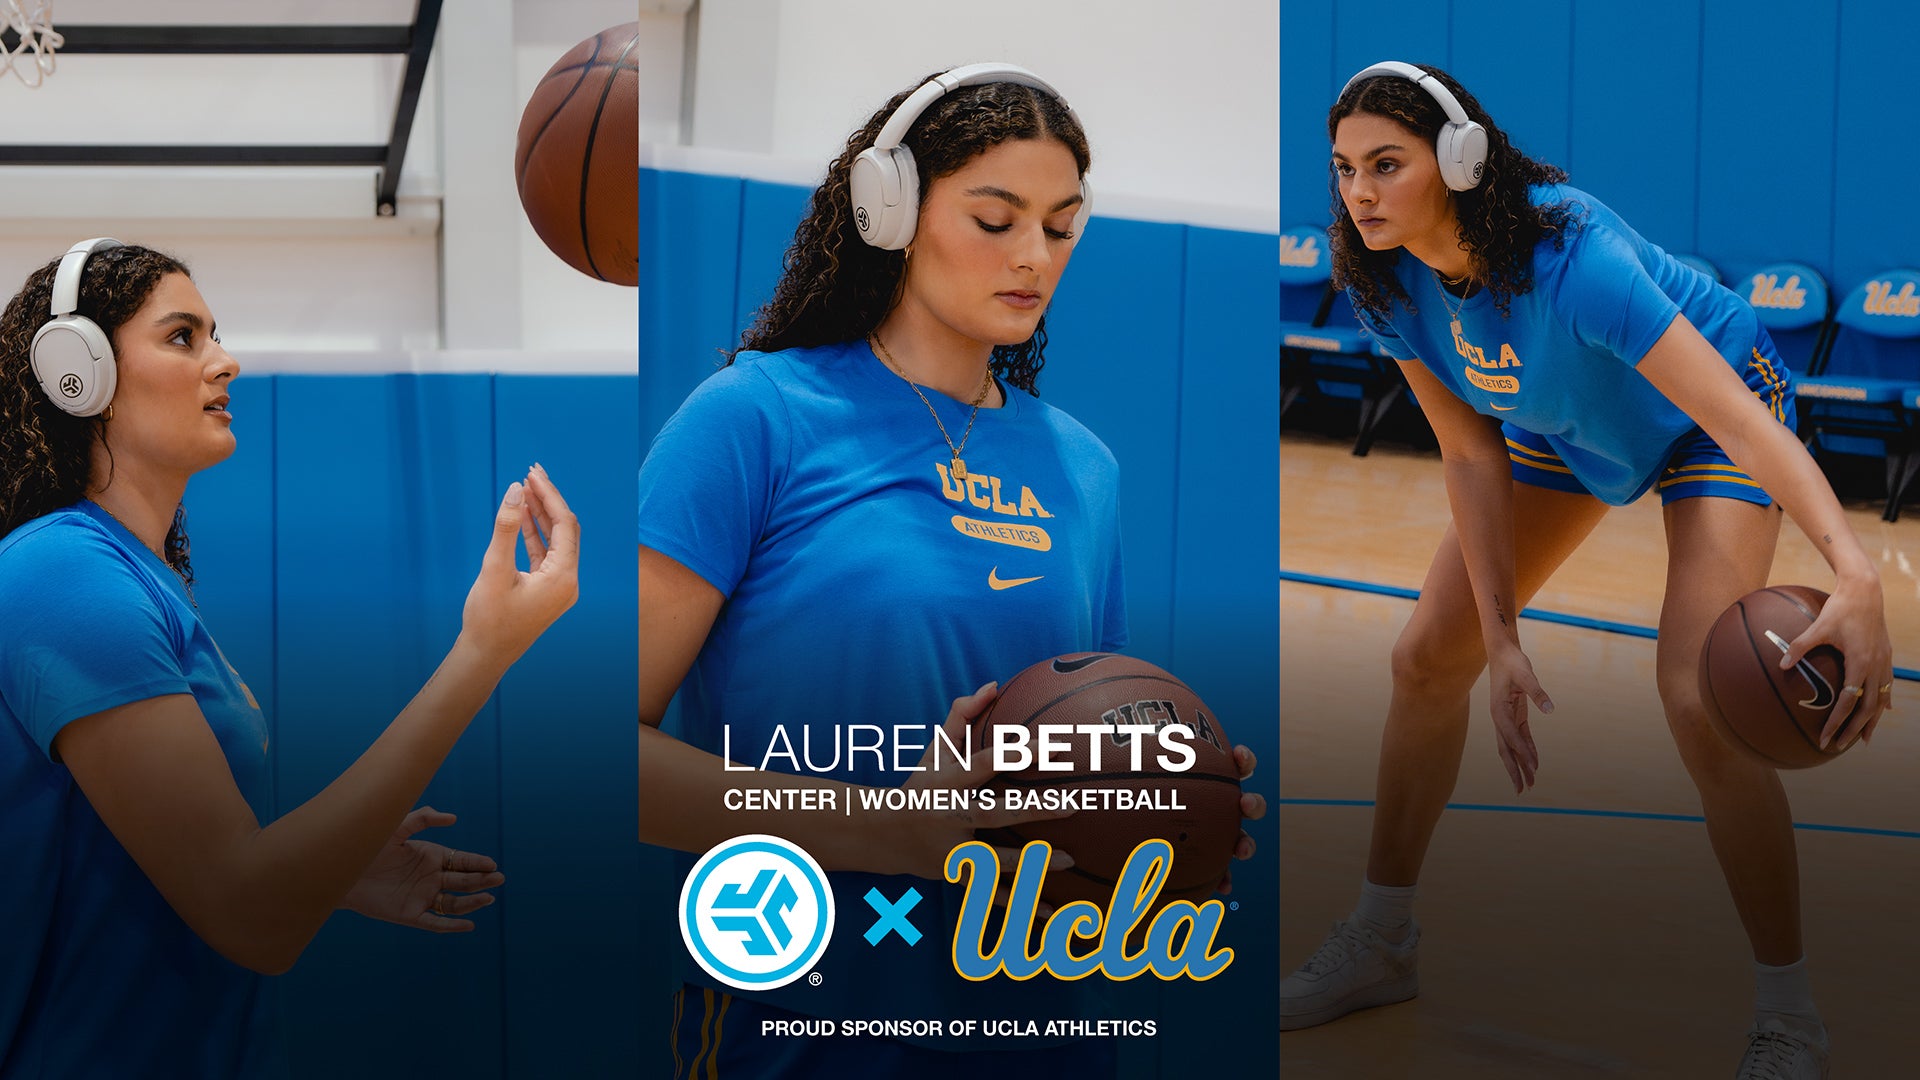 Lauren Betts of UCLA joins Team JLab